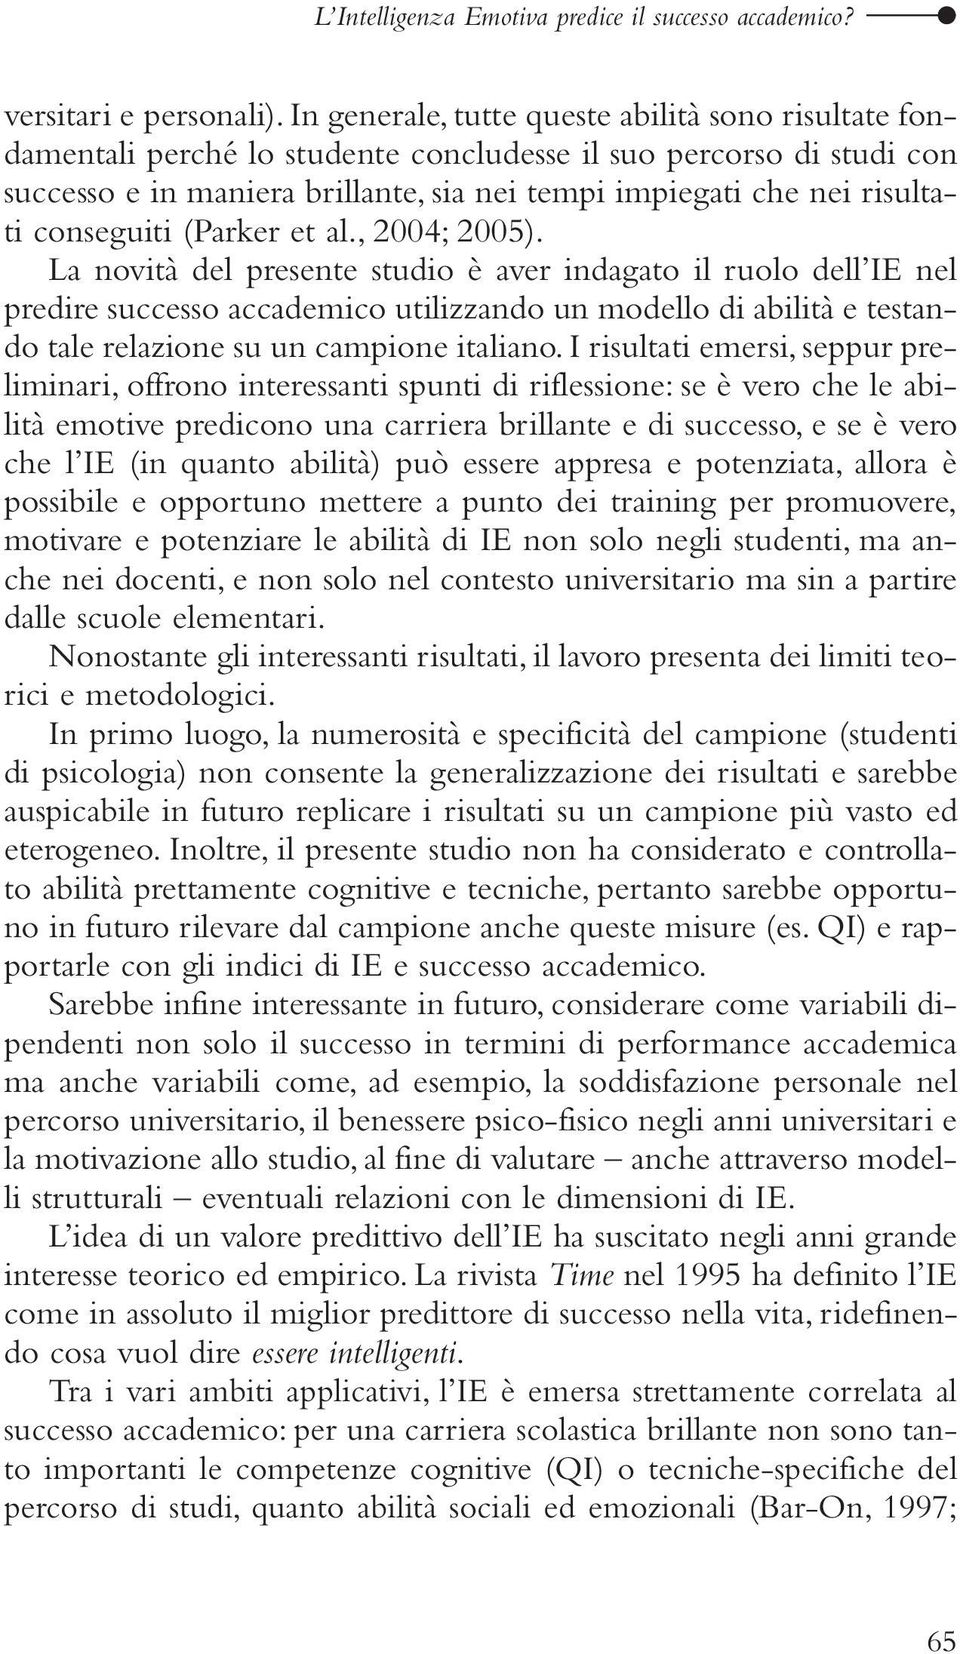 conseguiti (Parker et al., 2004; 2005).